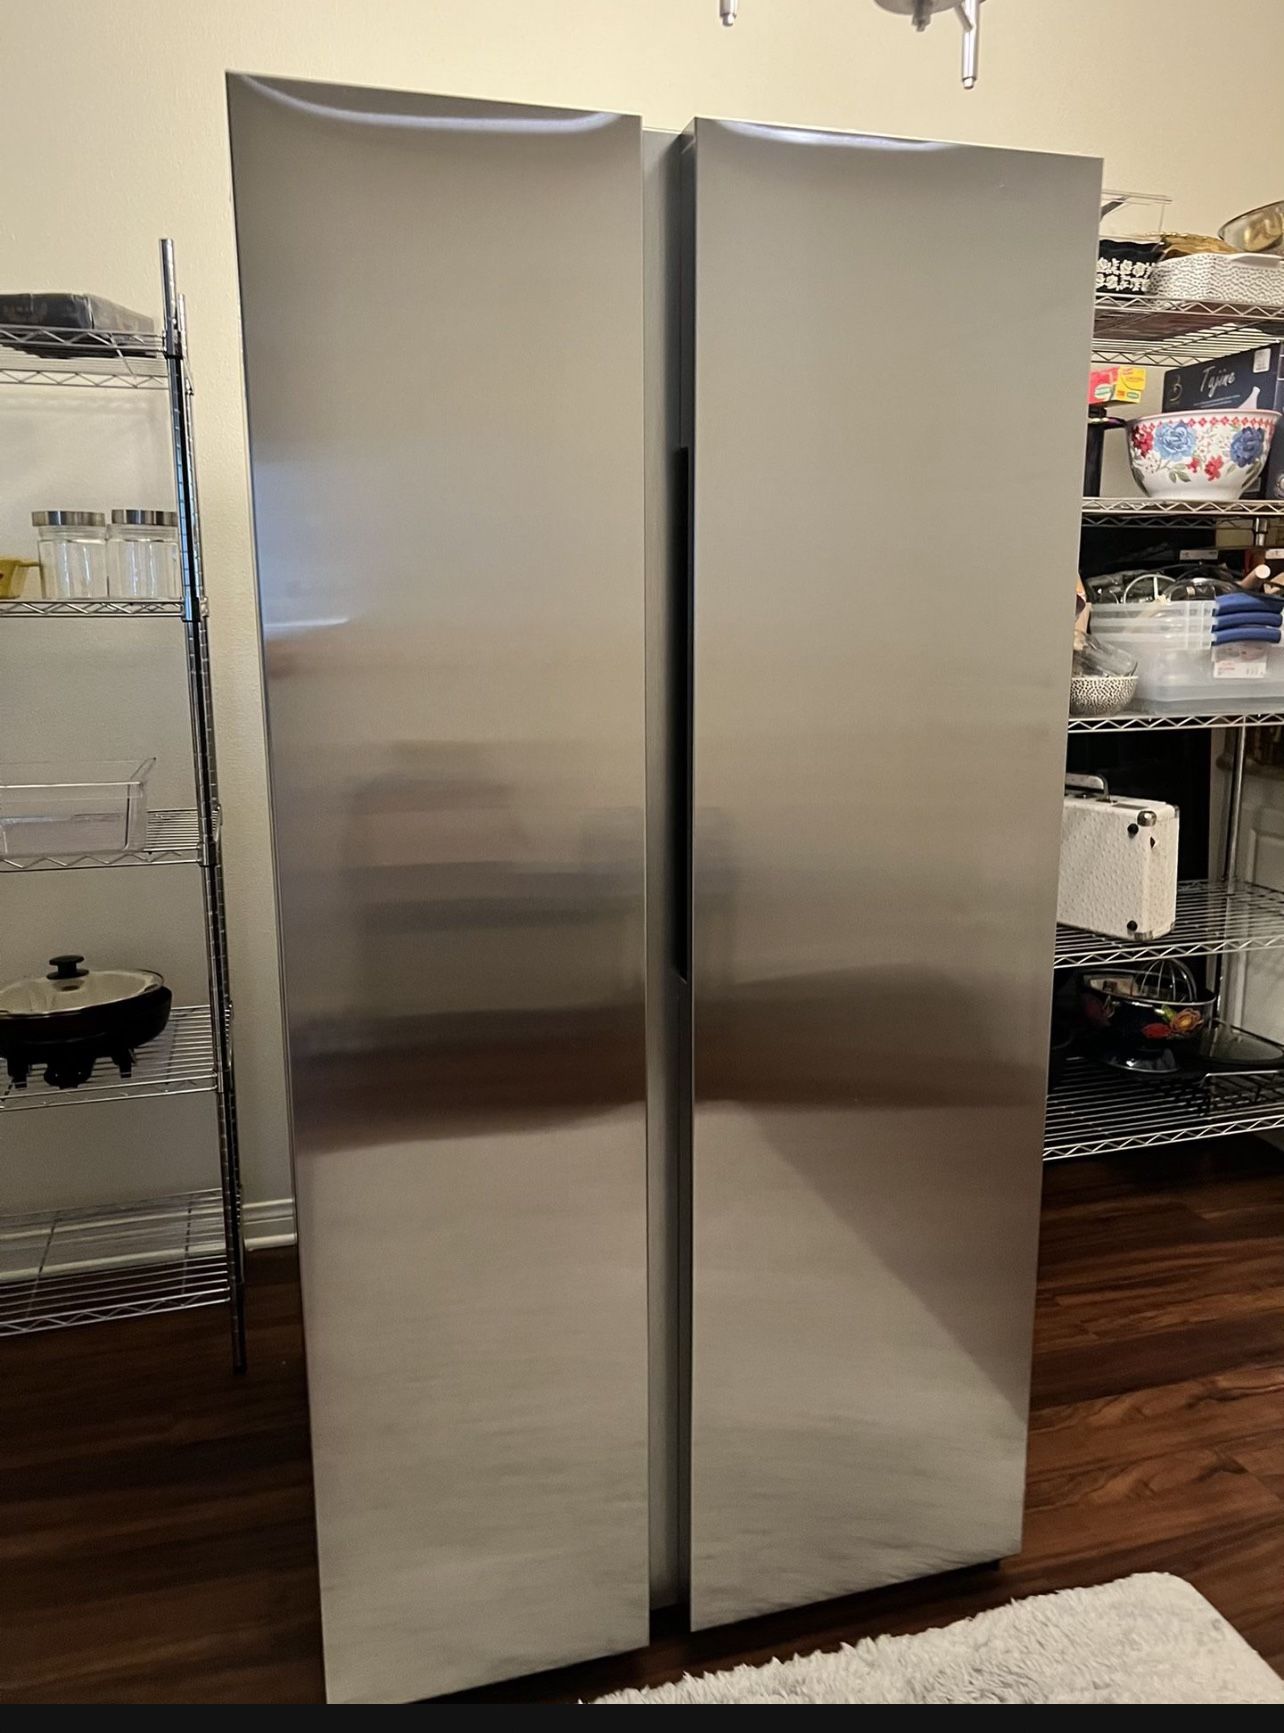 Samsung Nice Clean Refrigerator Ready To Use